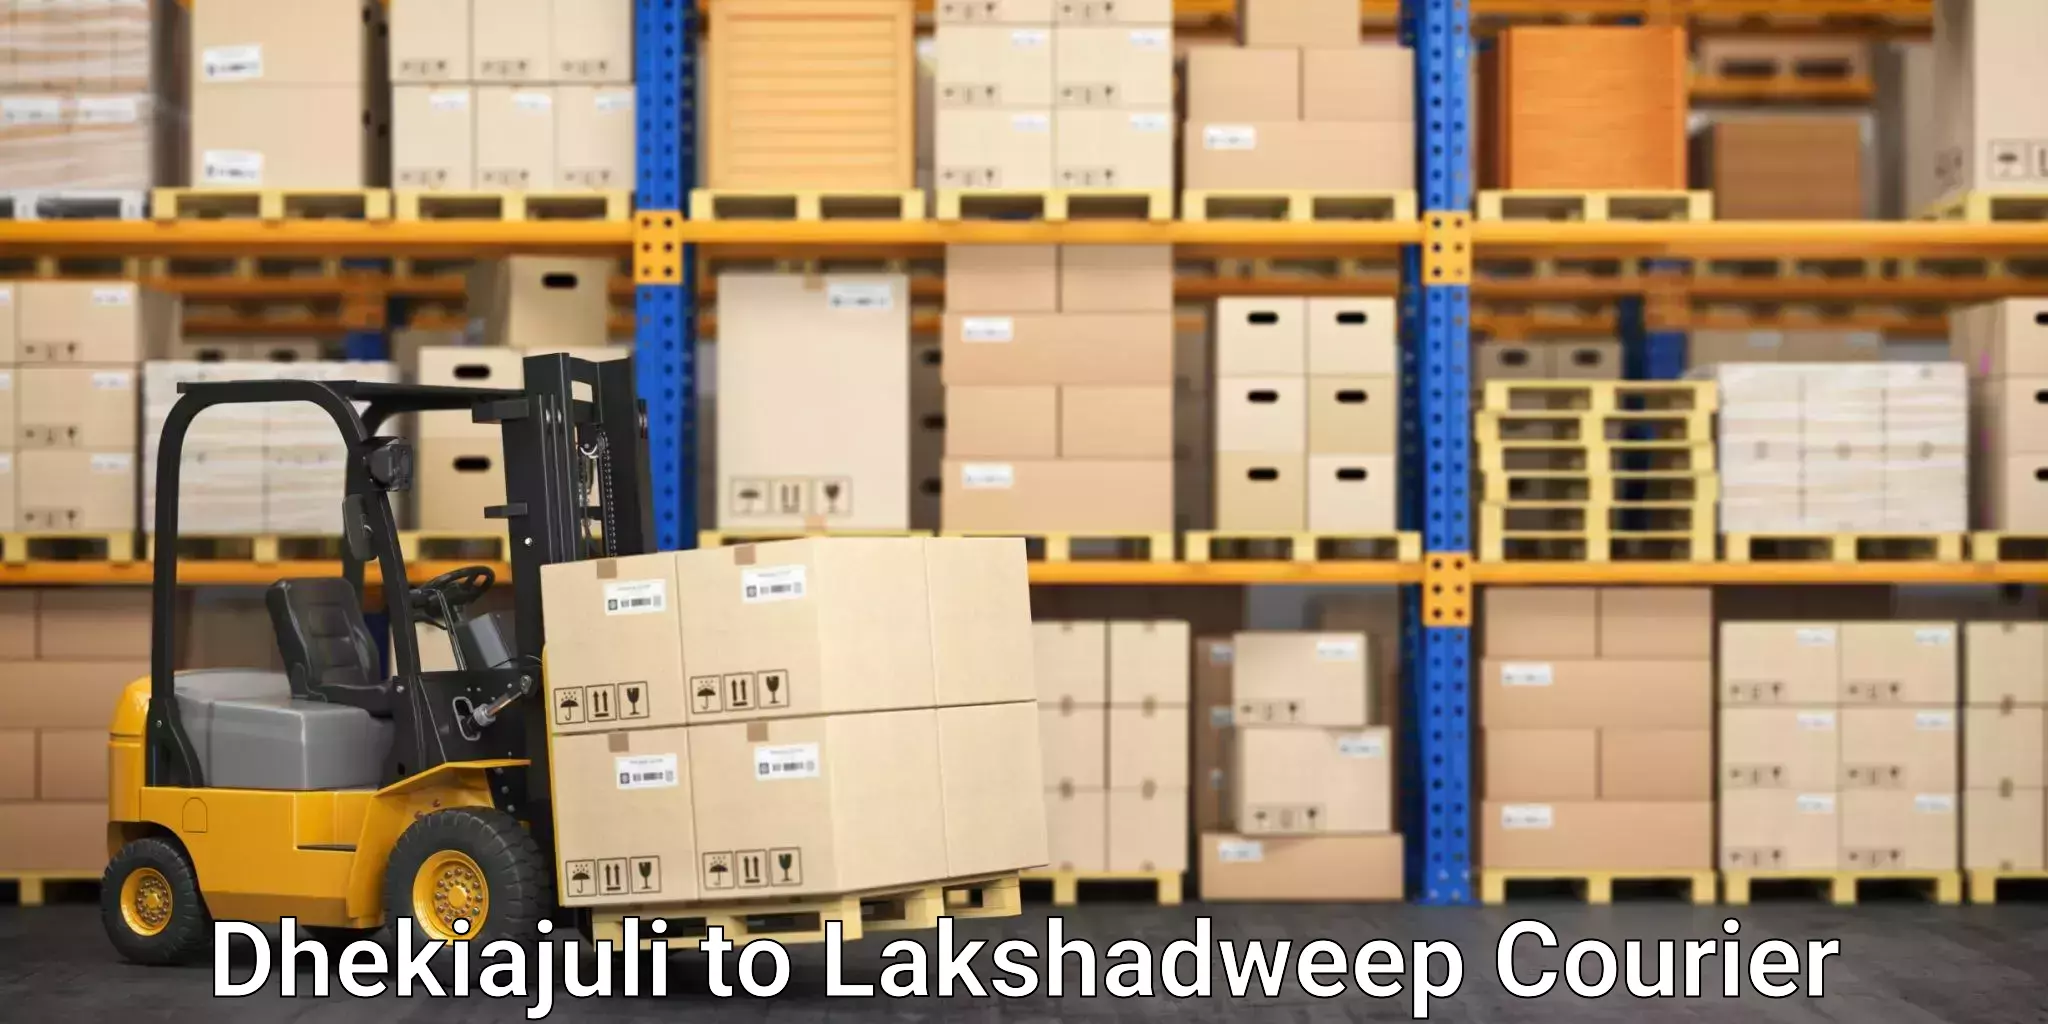 Global shipping networks Dhekiajuli to Lakshadweep